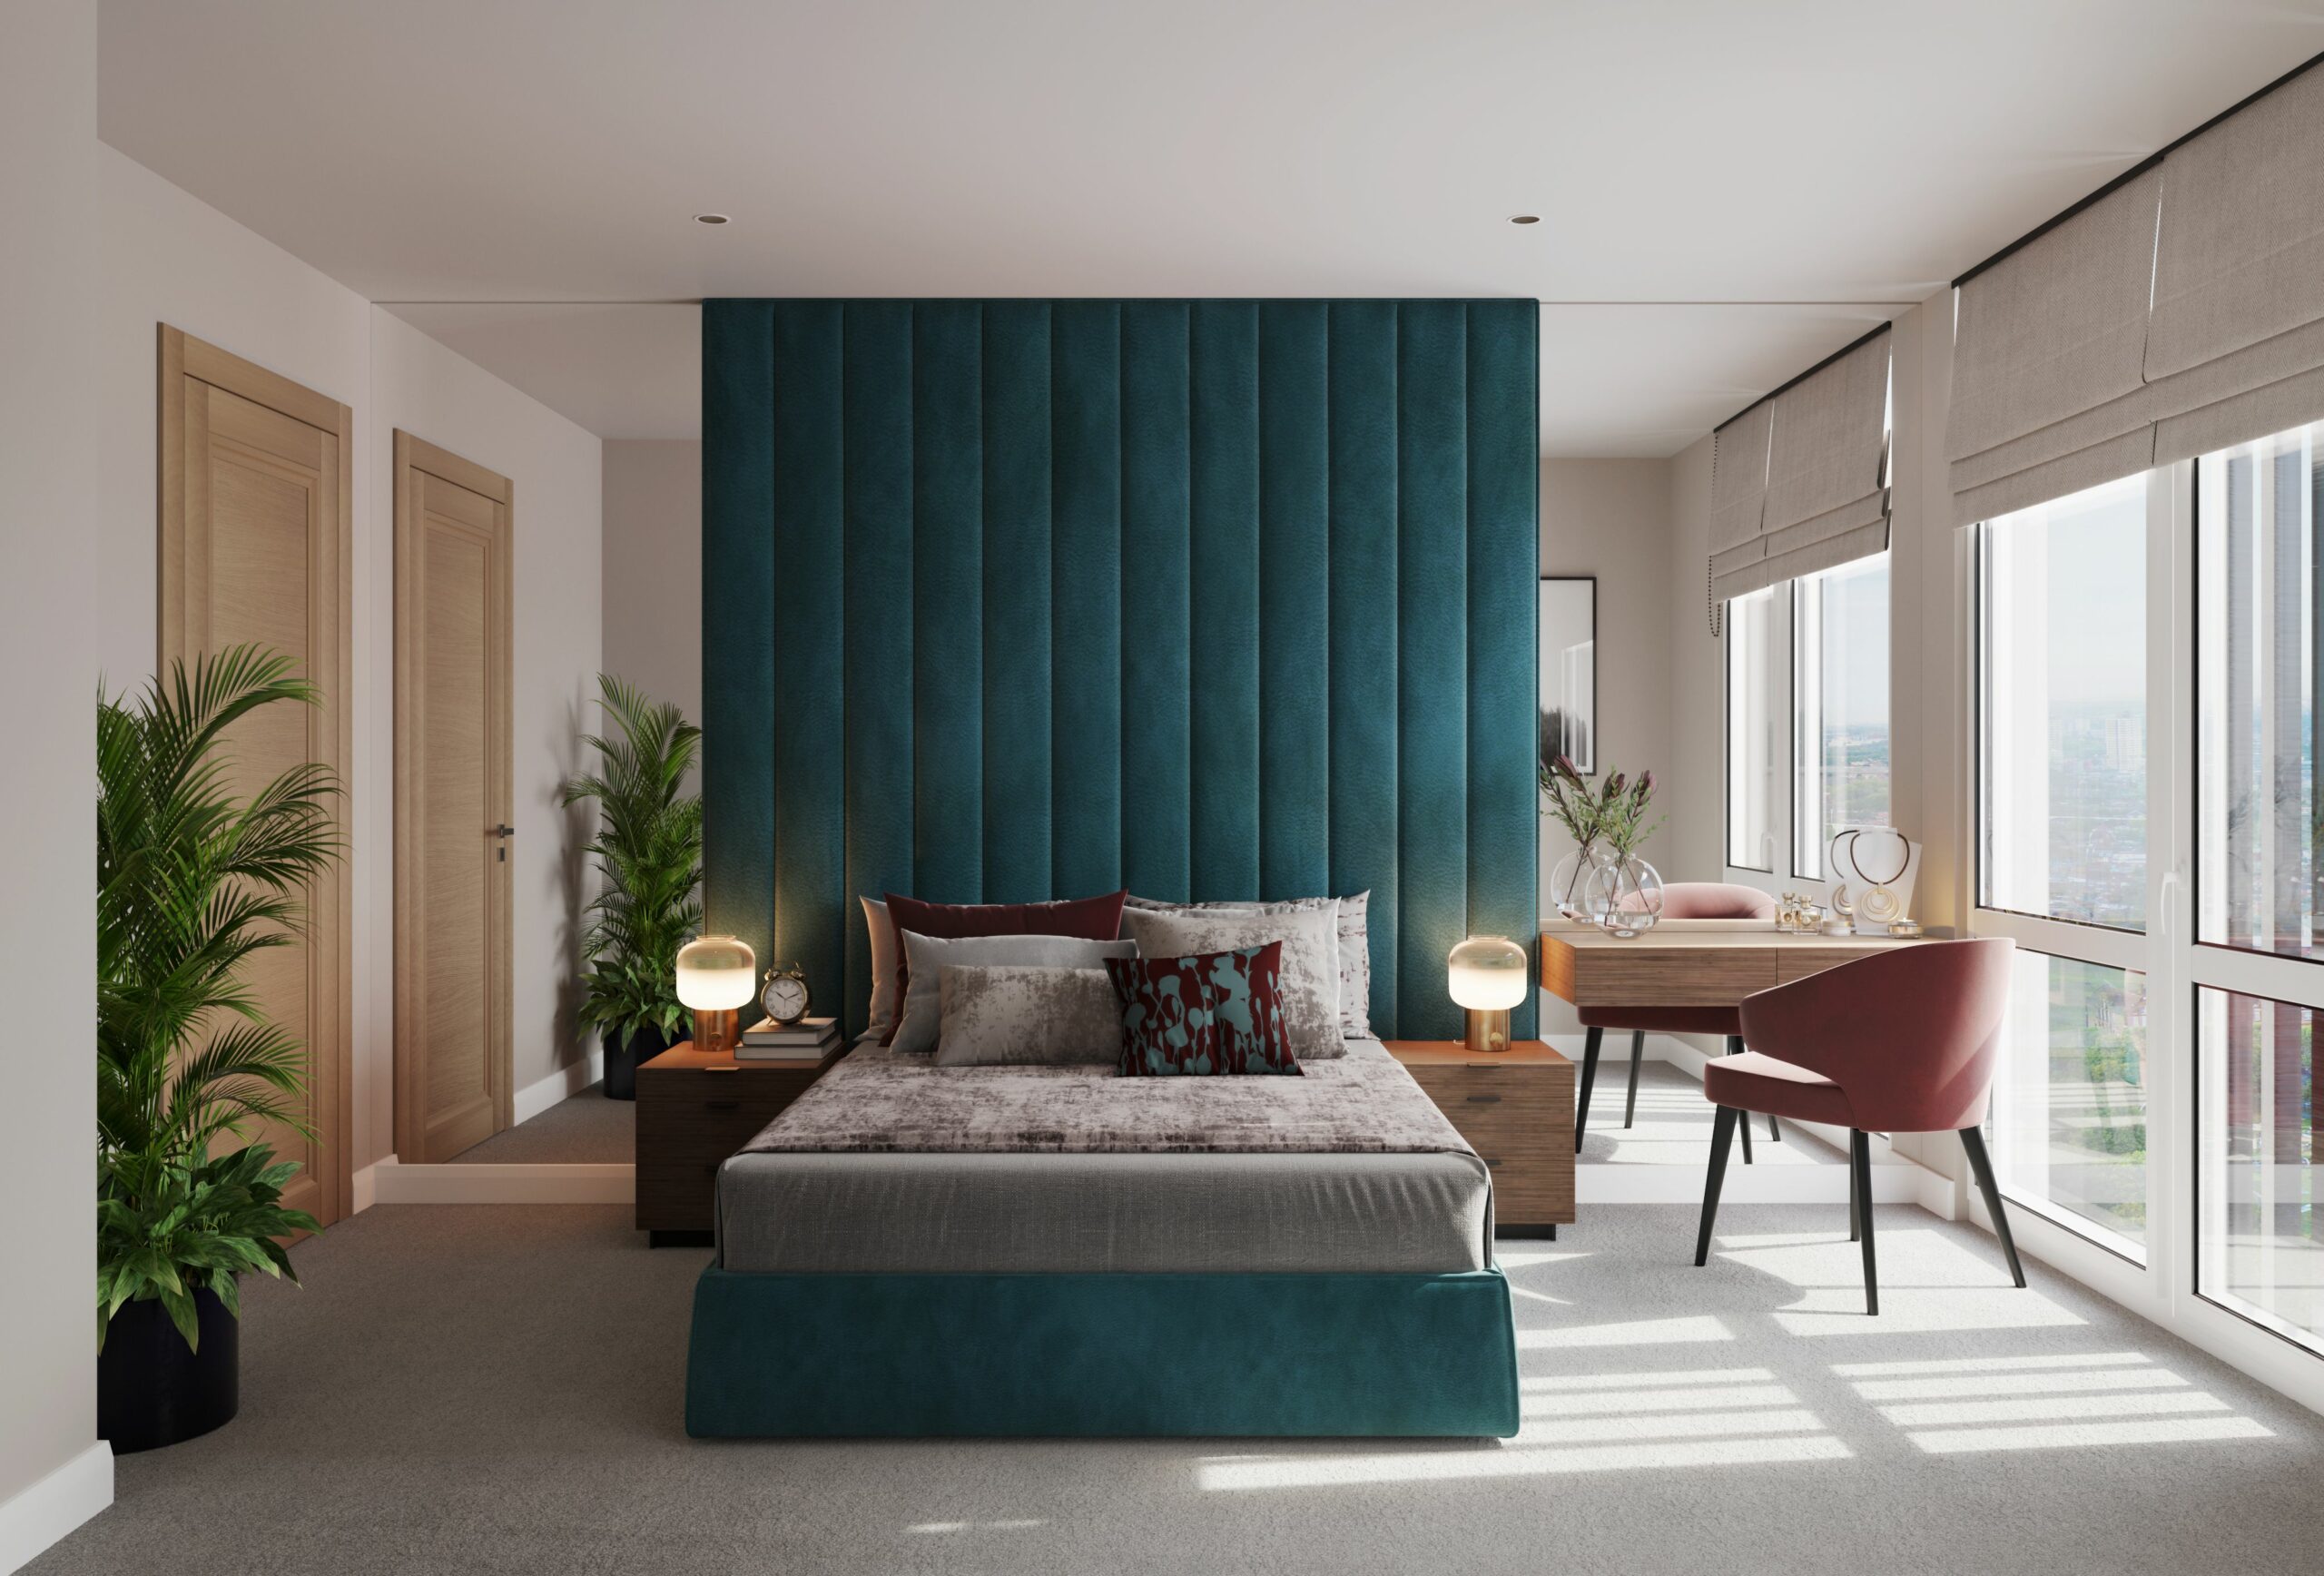 interior cgi bedroom 3d visualisation